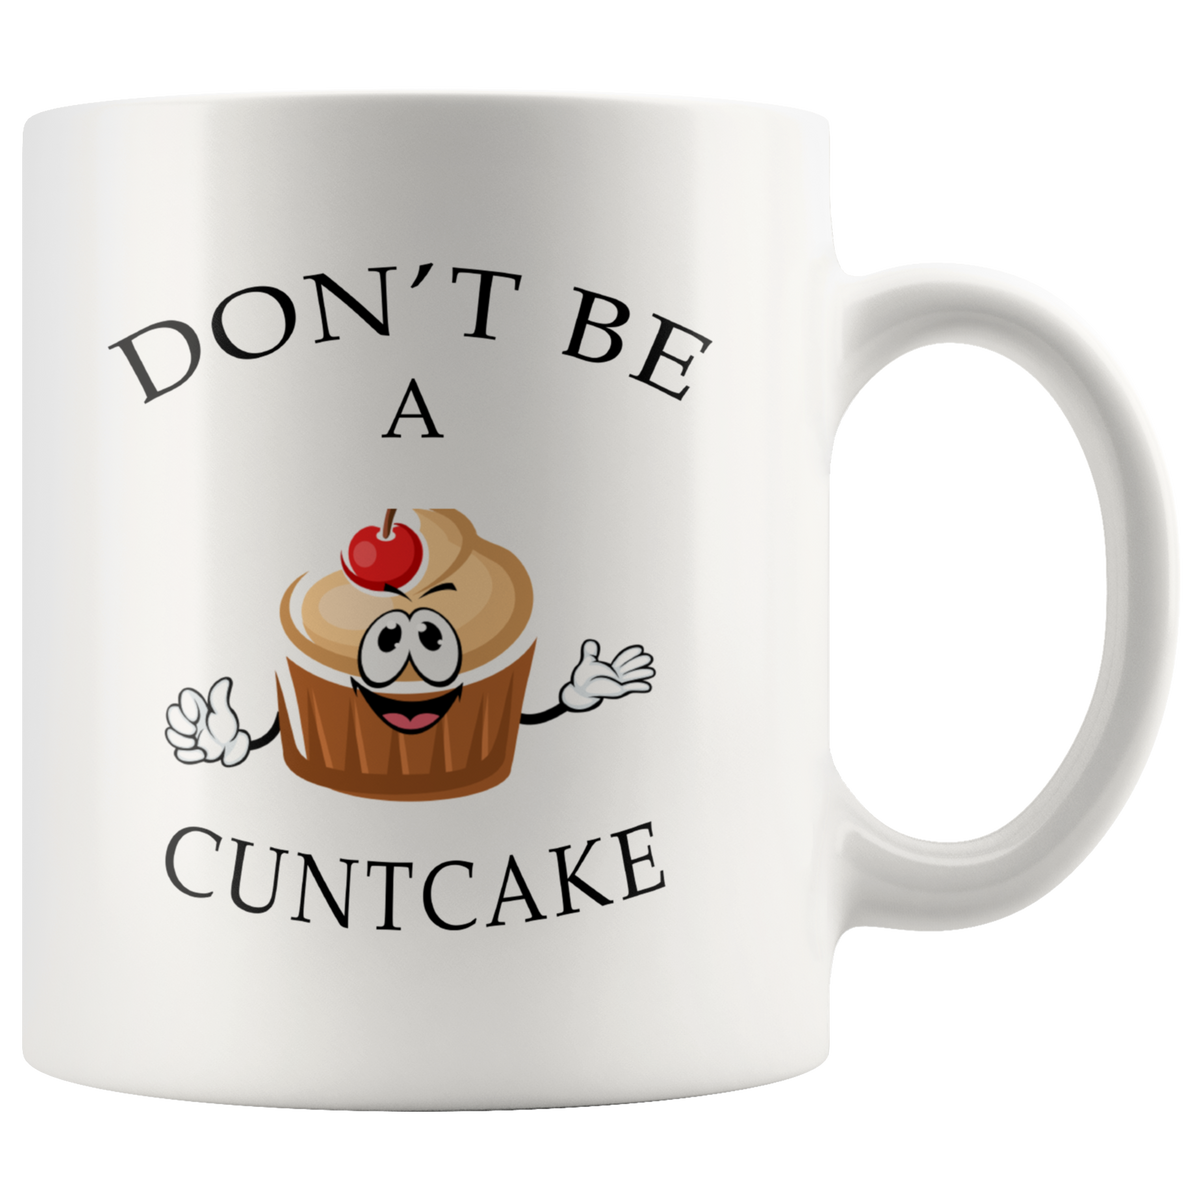 Gag Gift For Friends - Don't Be A Cuntcake White Ceramic 11oz Coffee Mug